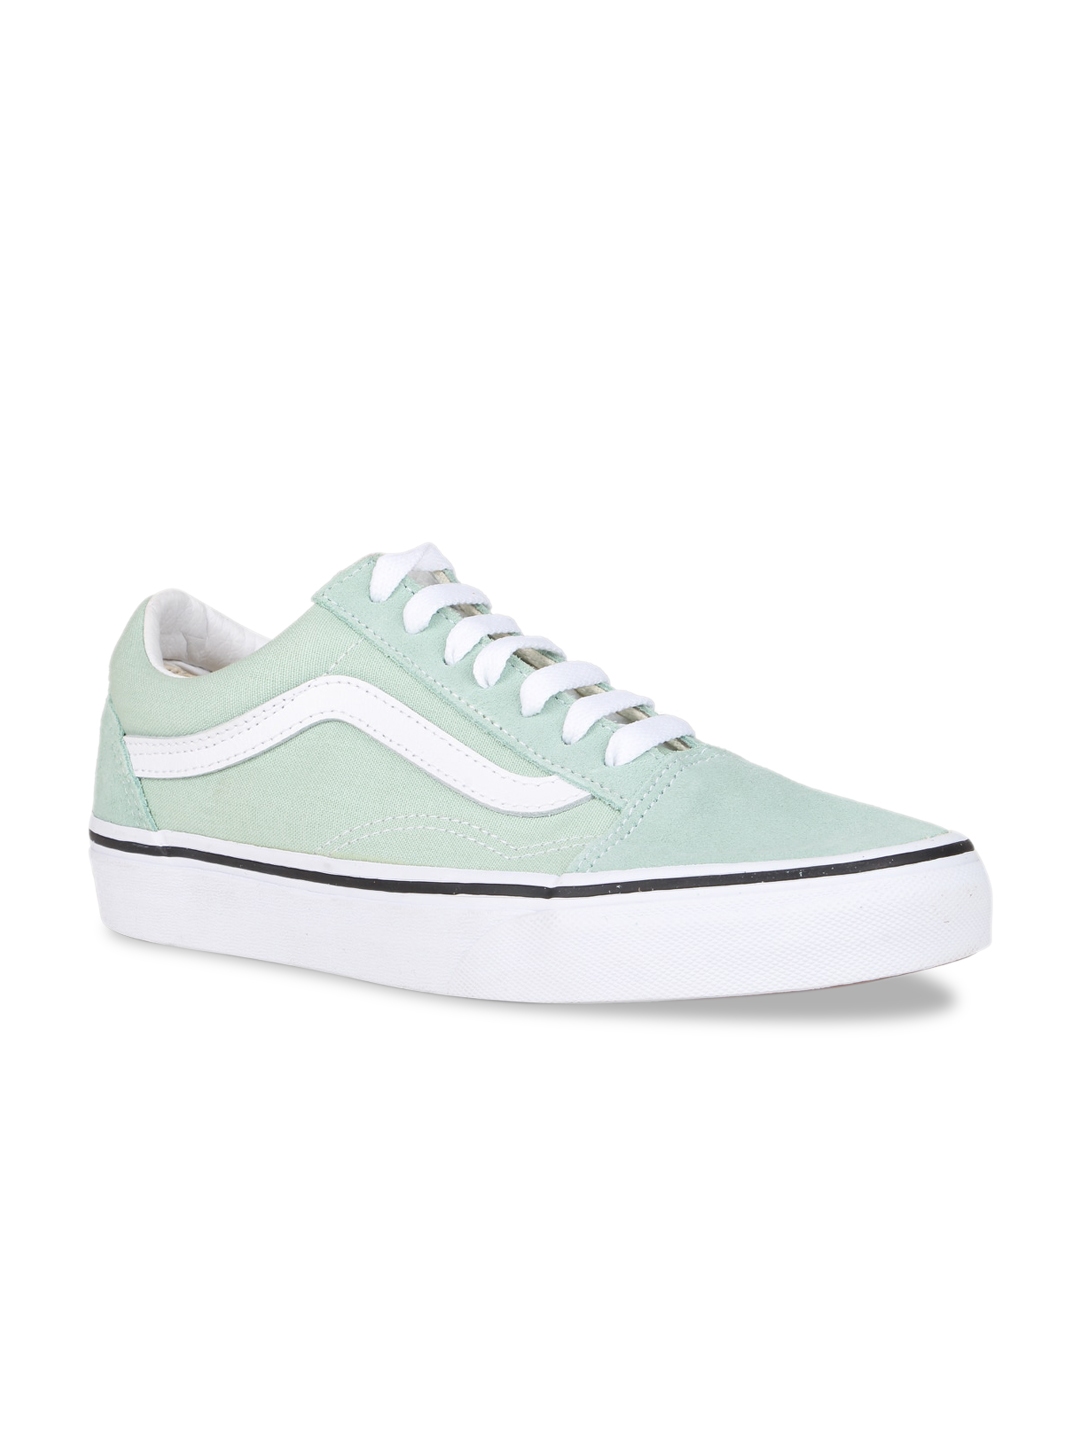 Buy Vans Women Mint Green Solid Sneakers - Casual Shoes for Women ...